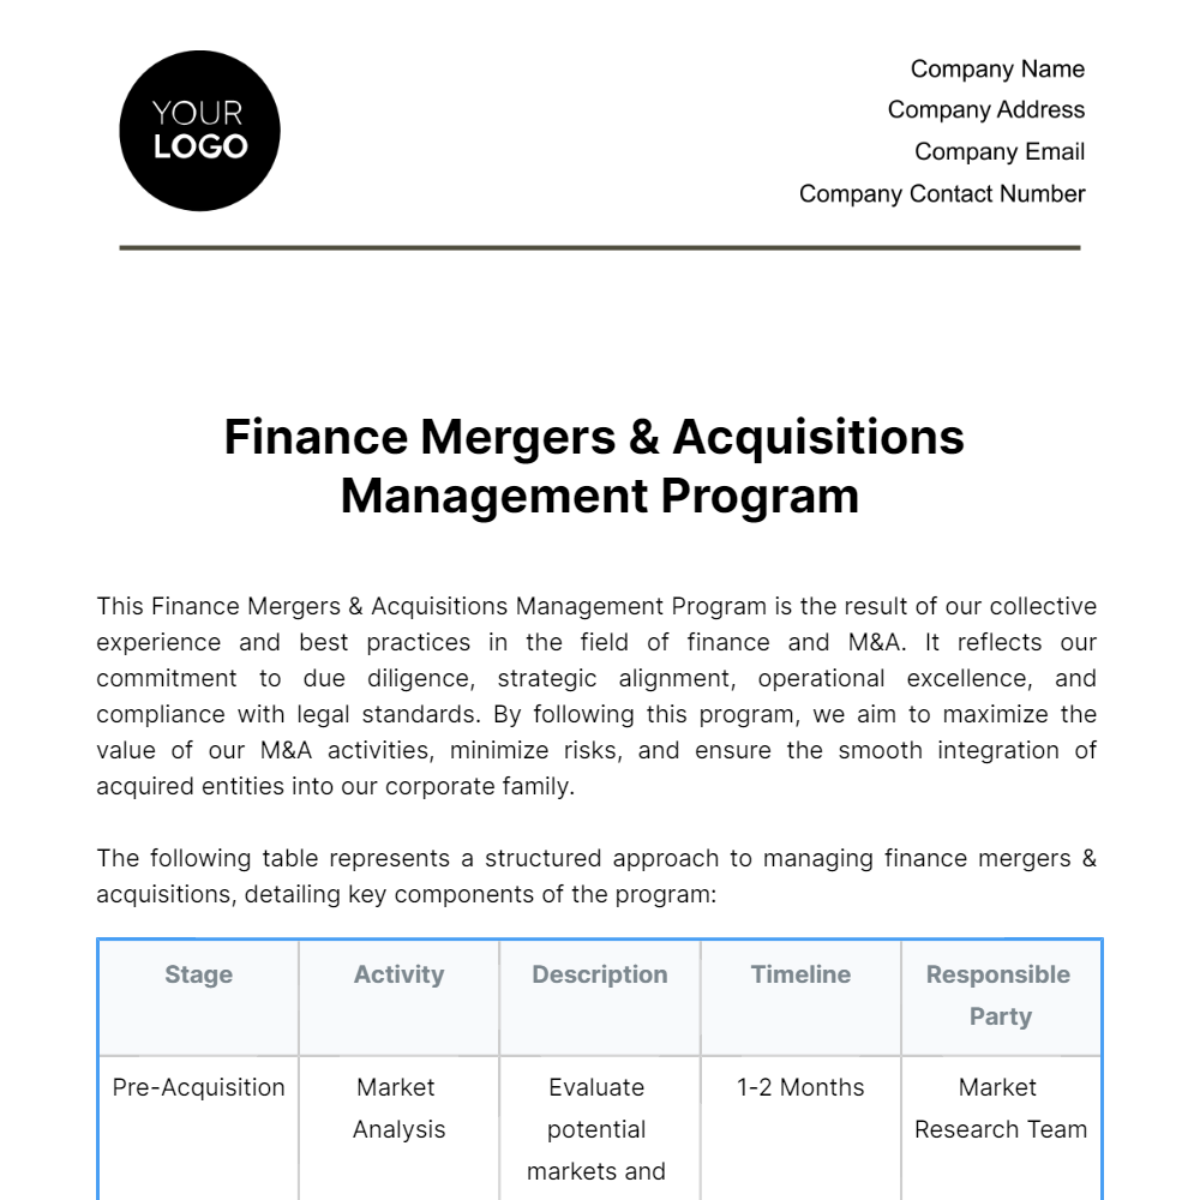 Finance Mergers & Acquisitions Management Program Template